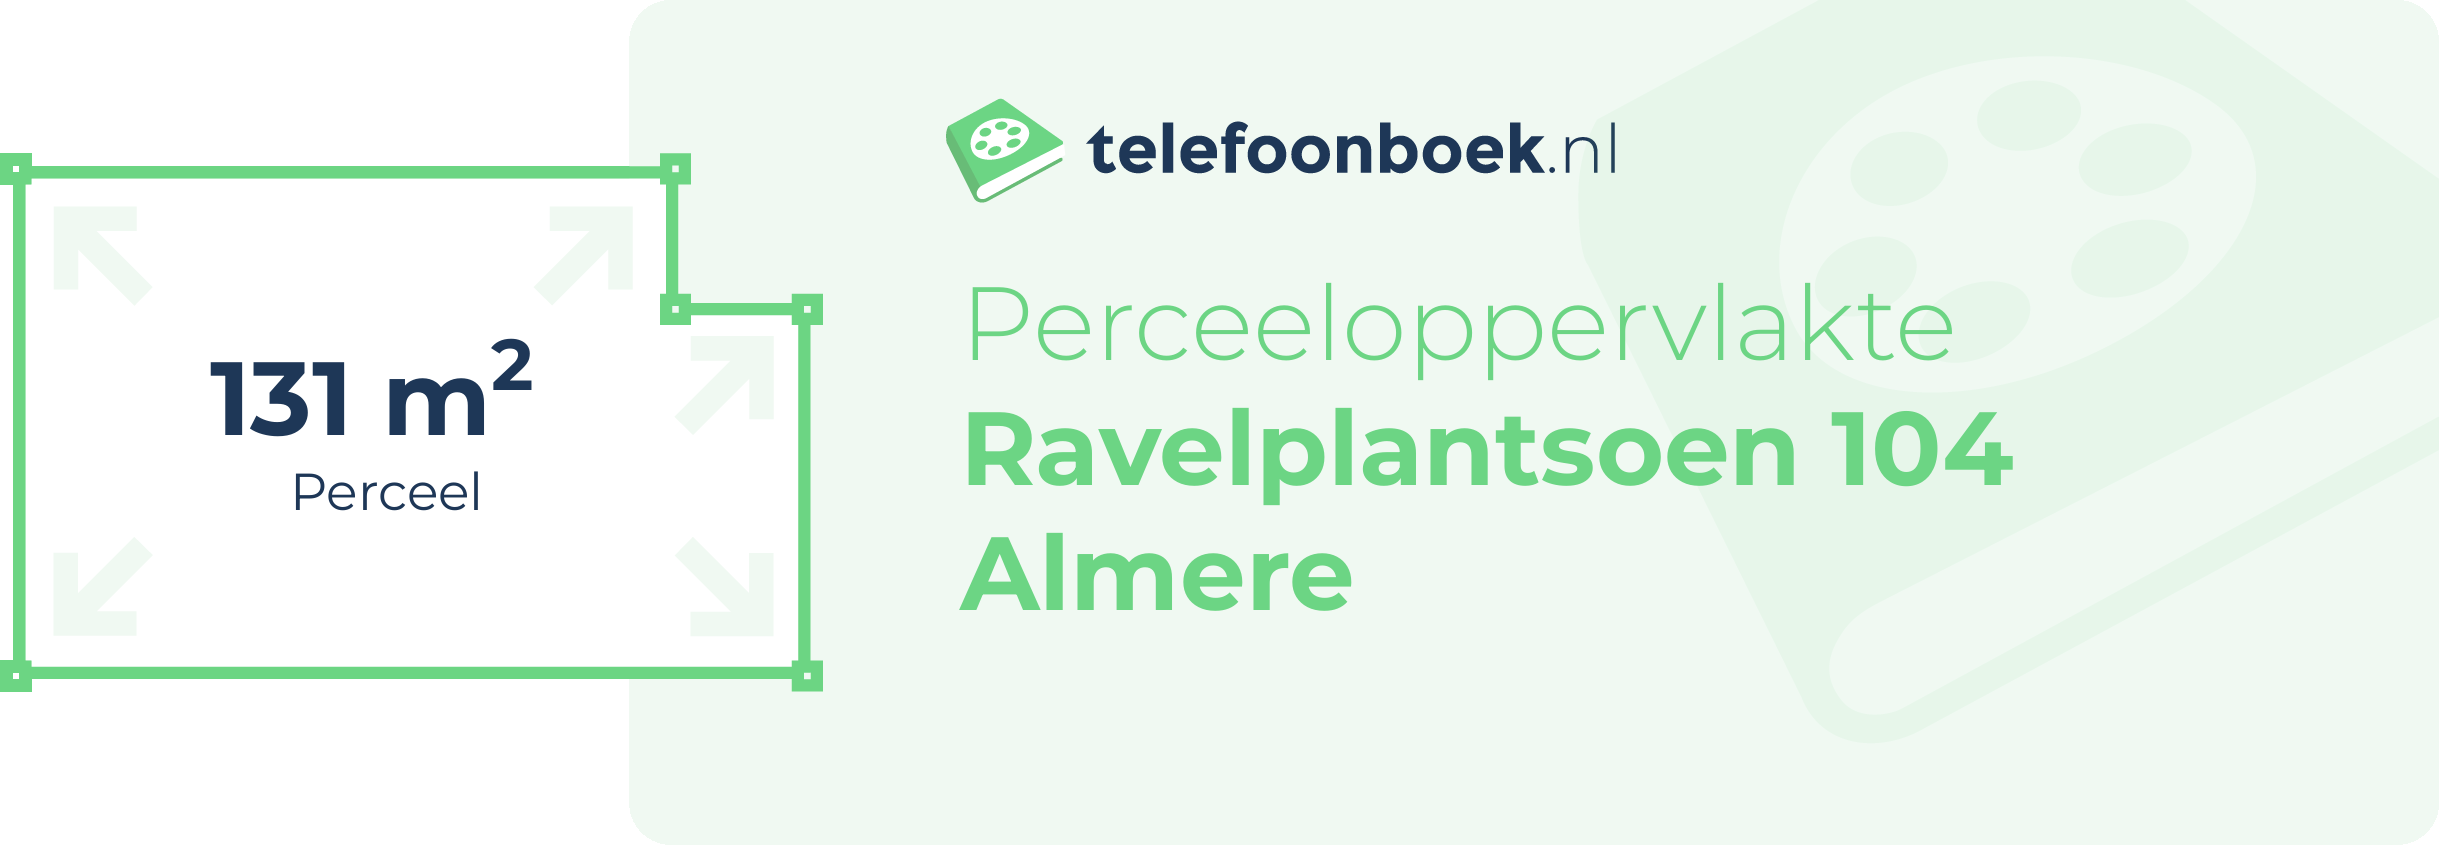 Perceeloppervlakte Ravelplantsoen 104 Almere